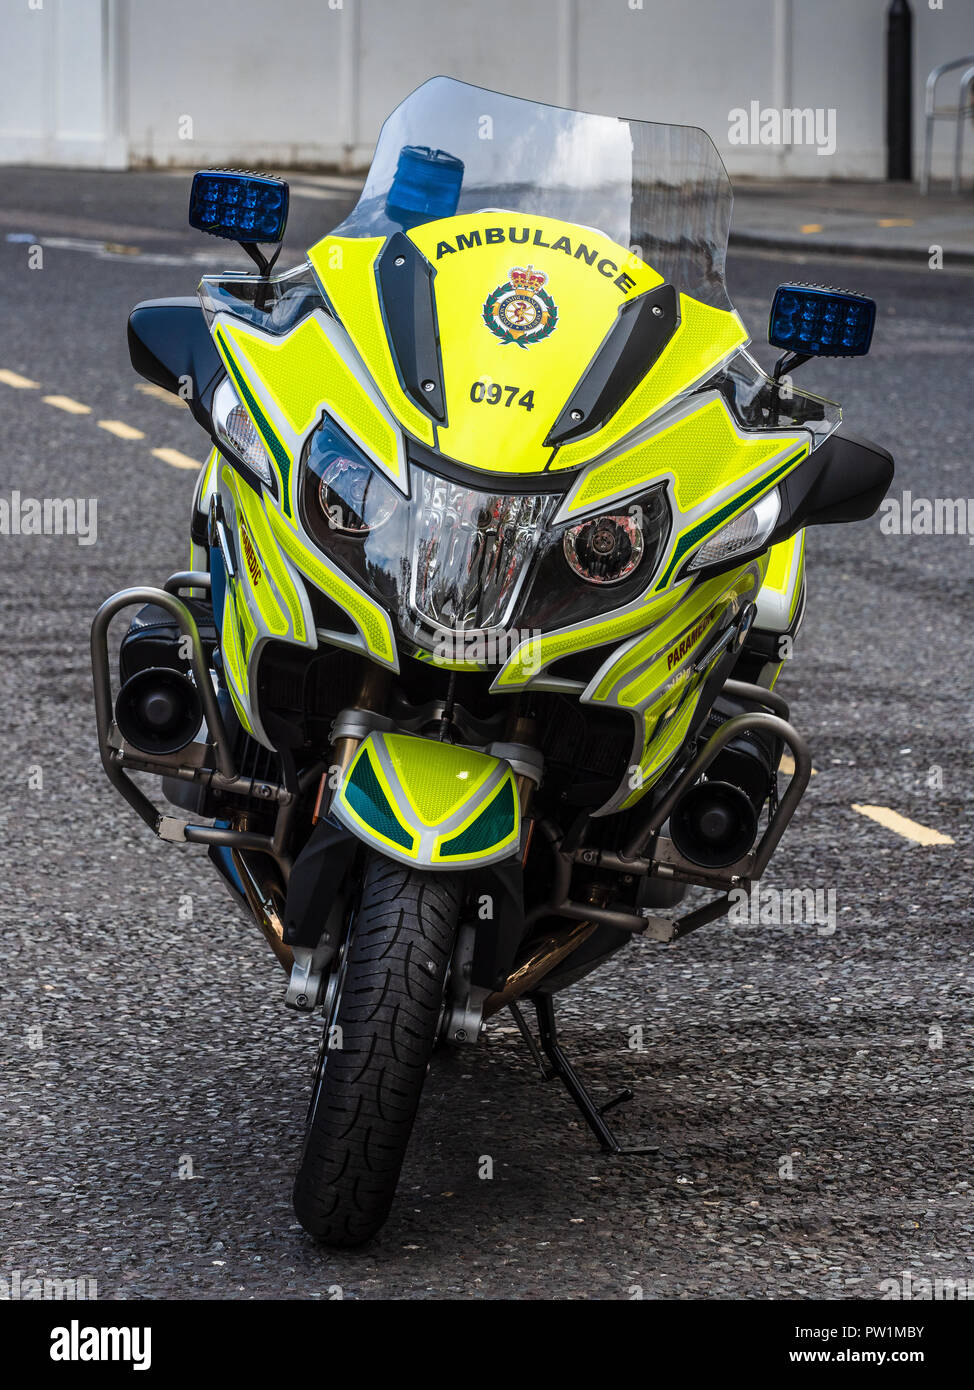 London Ambulance Service Motorcycle Motorbike parked no rider Stock Photo